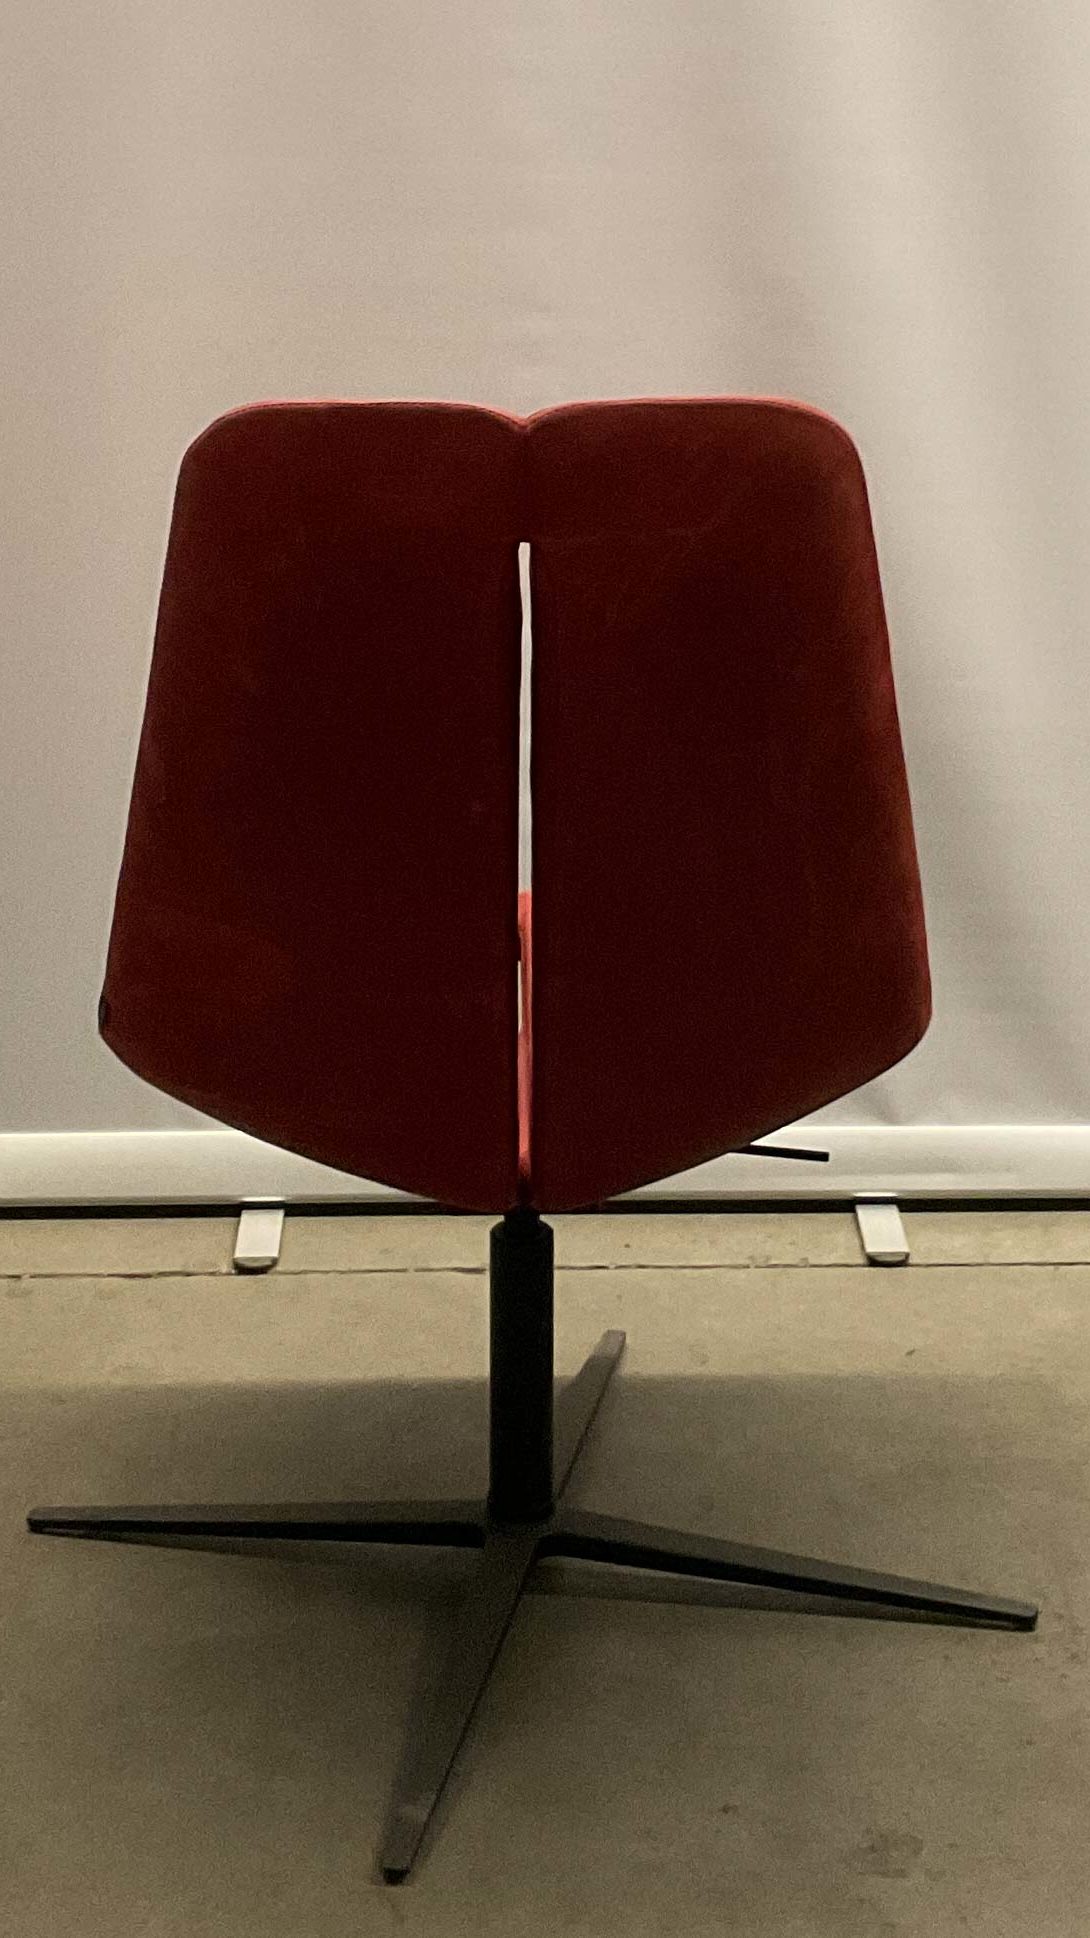 Wagner W-Lounge Chair schwarz/rot #319